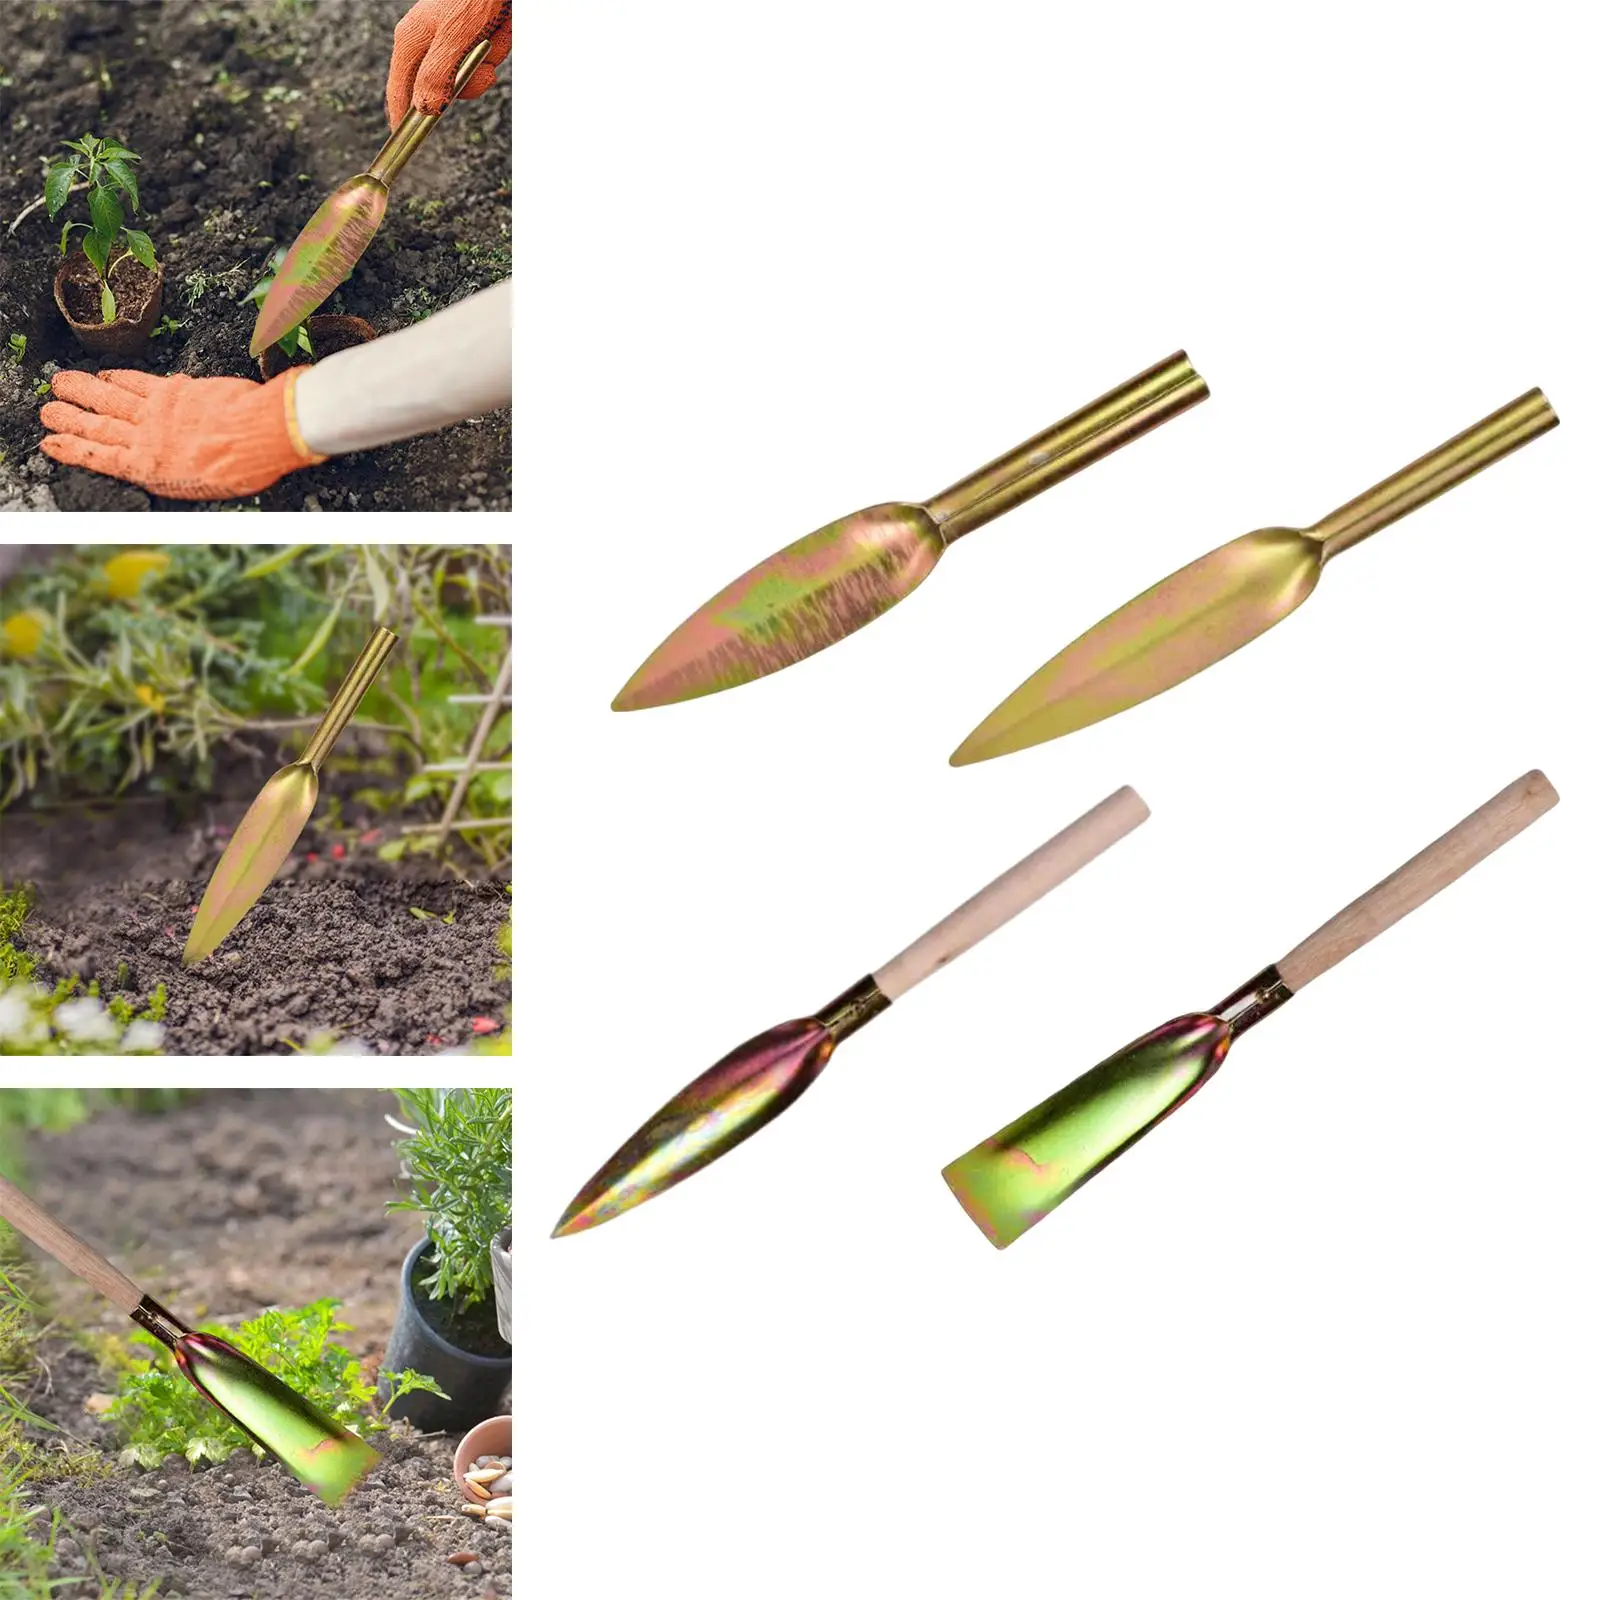 Leaf Shaped Hand Shovel Camping Hand Trowel Household Gardening Shovel for Garden Work Outdoor Loosening Soil Weeding Digging